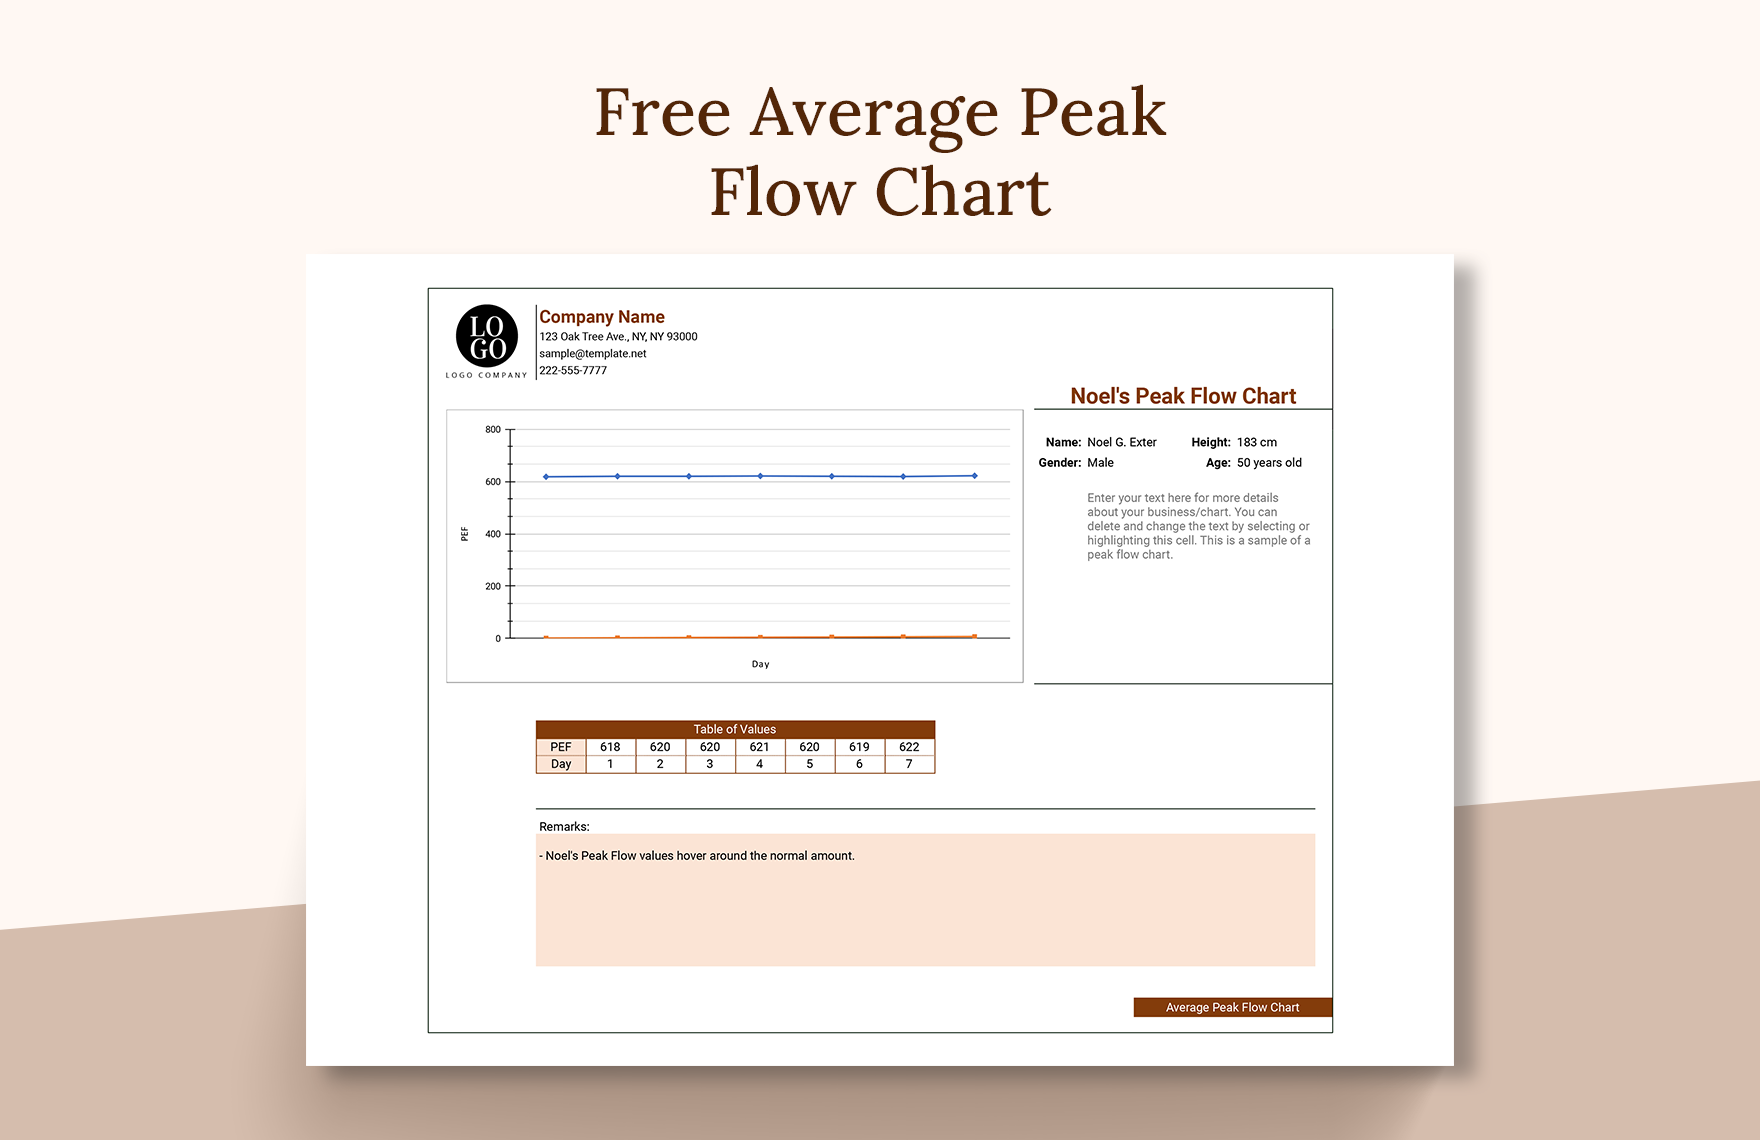 Free Average Peak Flow Chart